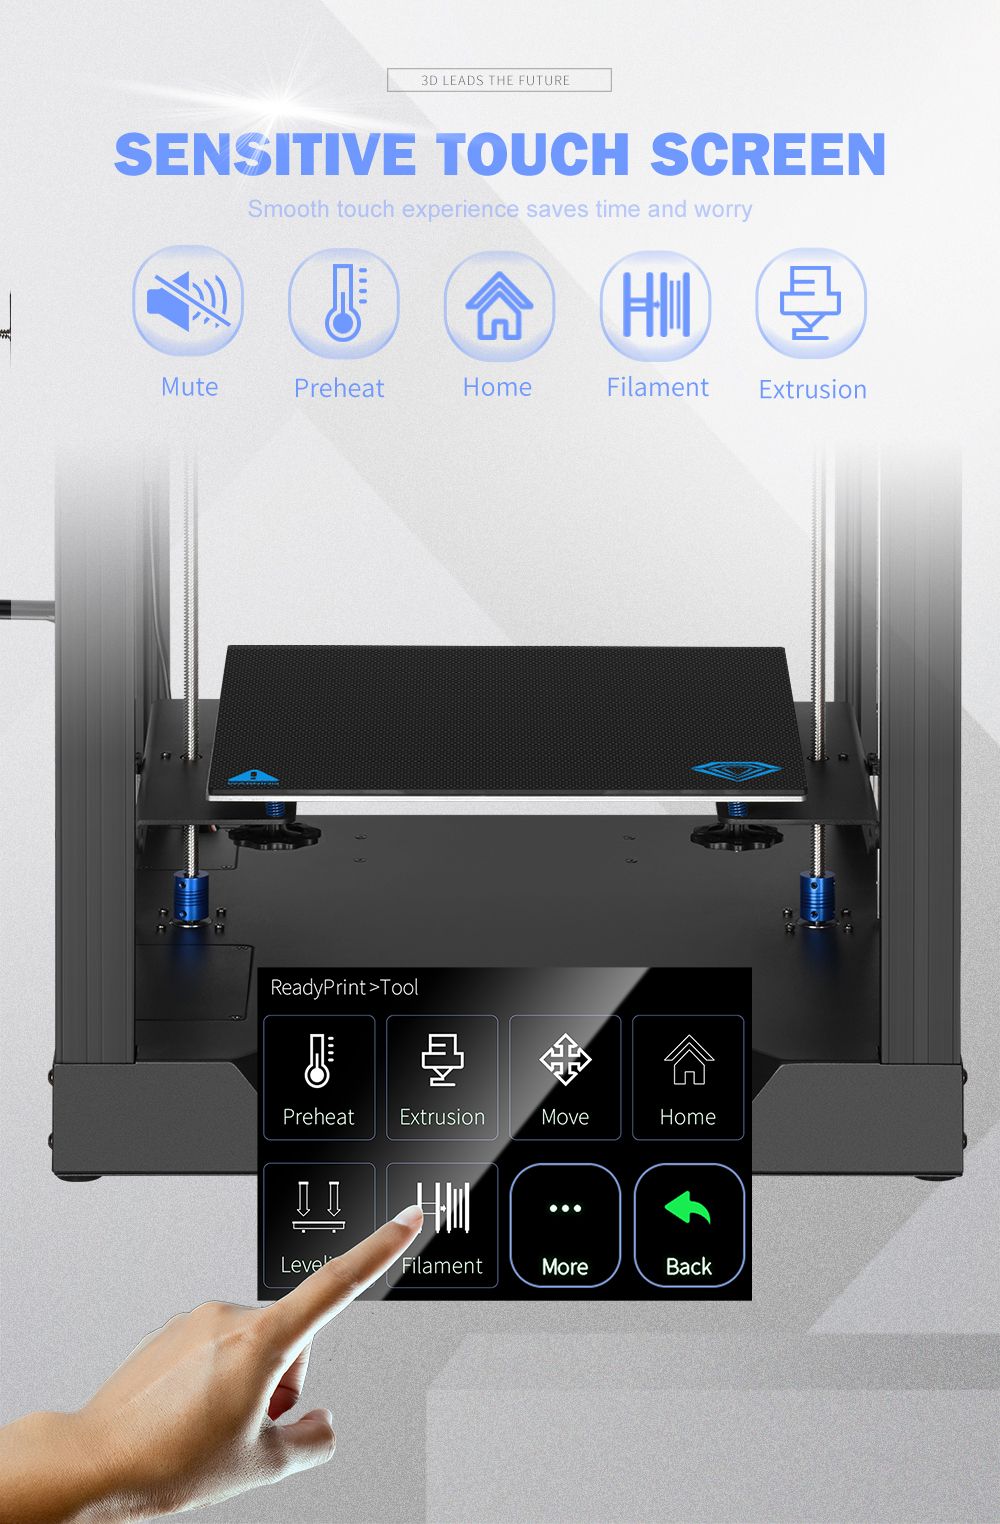 Twotrees Sappheiros Plus Core XY 3D-printer Volledig metalen behuizing/Dubbele lineaire geleider/Dual Drive Extruder 300x300x350mm